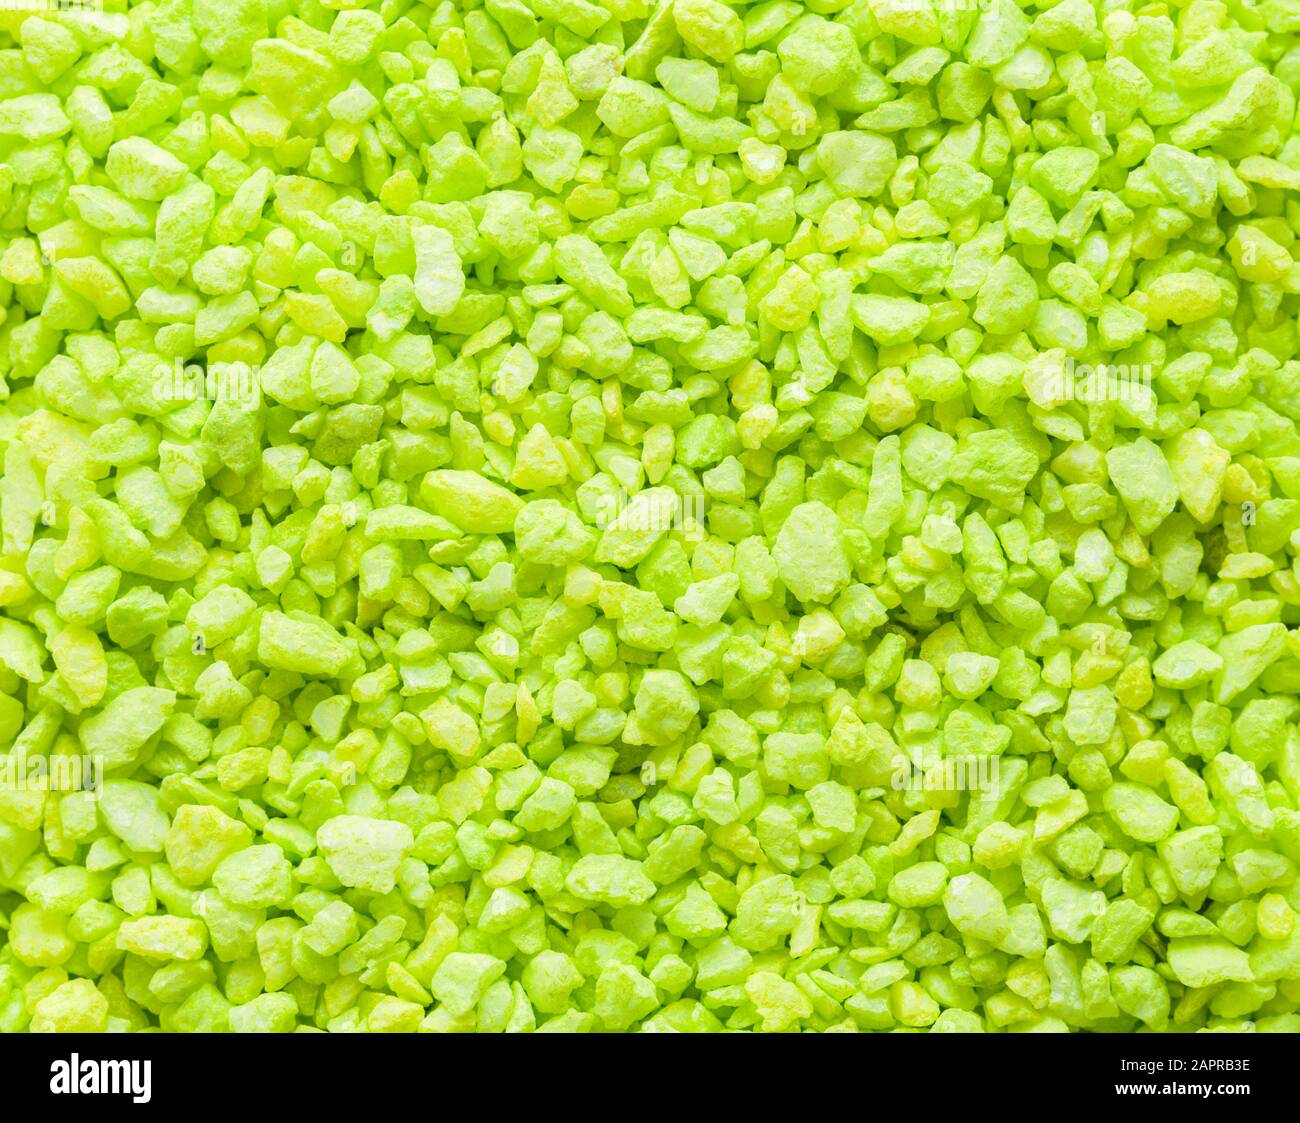 Small Bright Green Fish Tank Gravel Background. Stock Photo